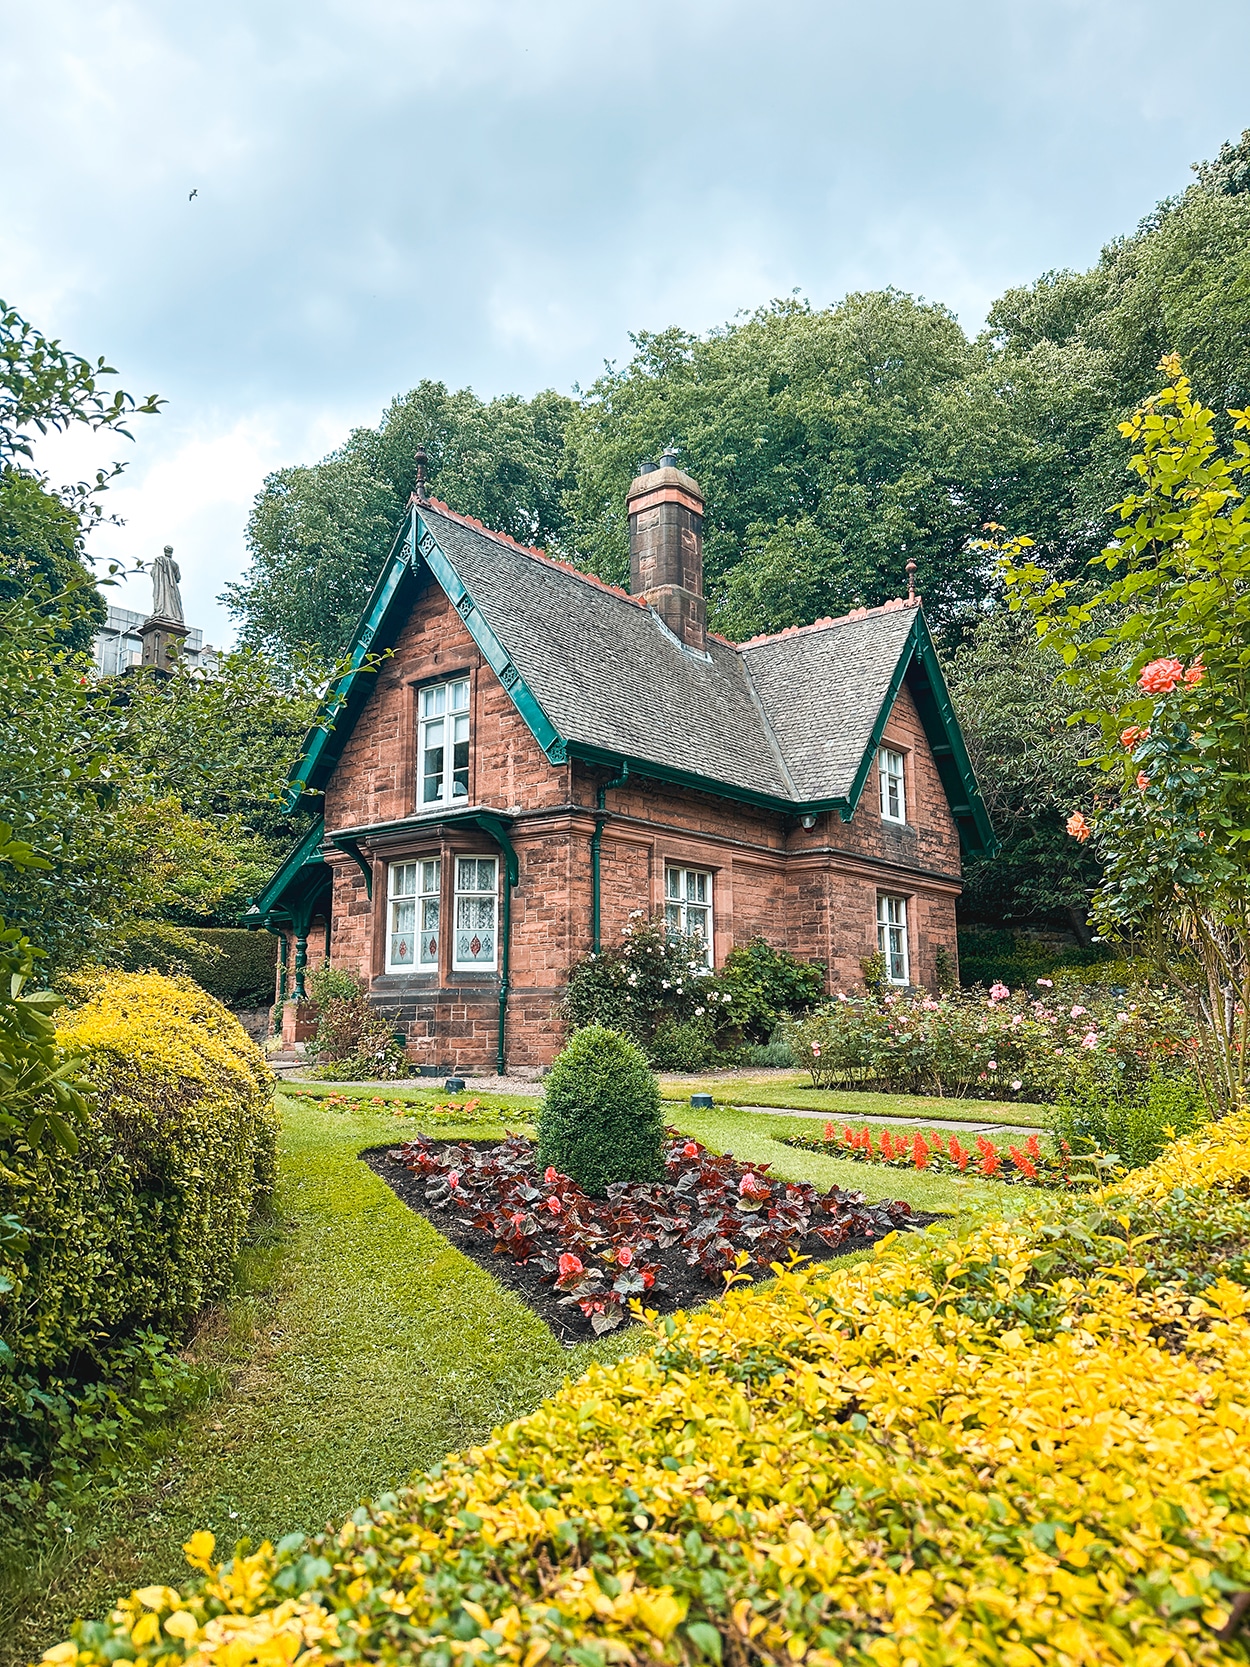 Gardener's Cottage in Princes Street Gardens - photo by Keryn Means editor of Twist Travel Magazine